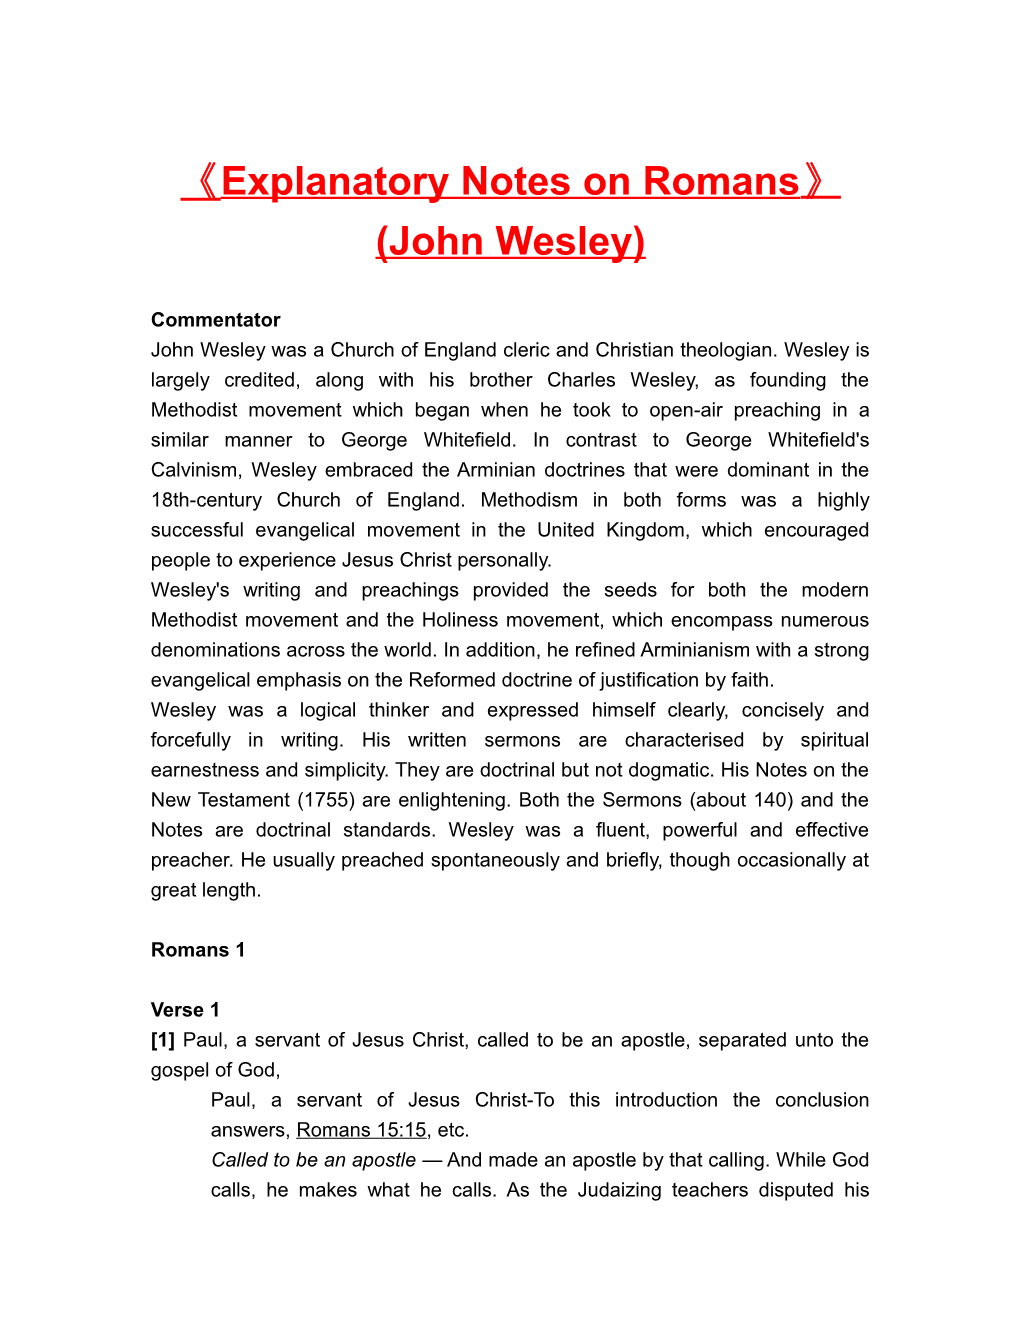 Explanatory Notes on Romans (John Wesley)